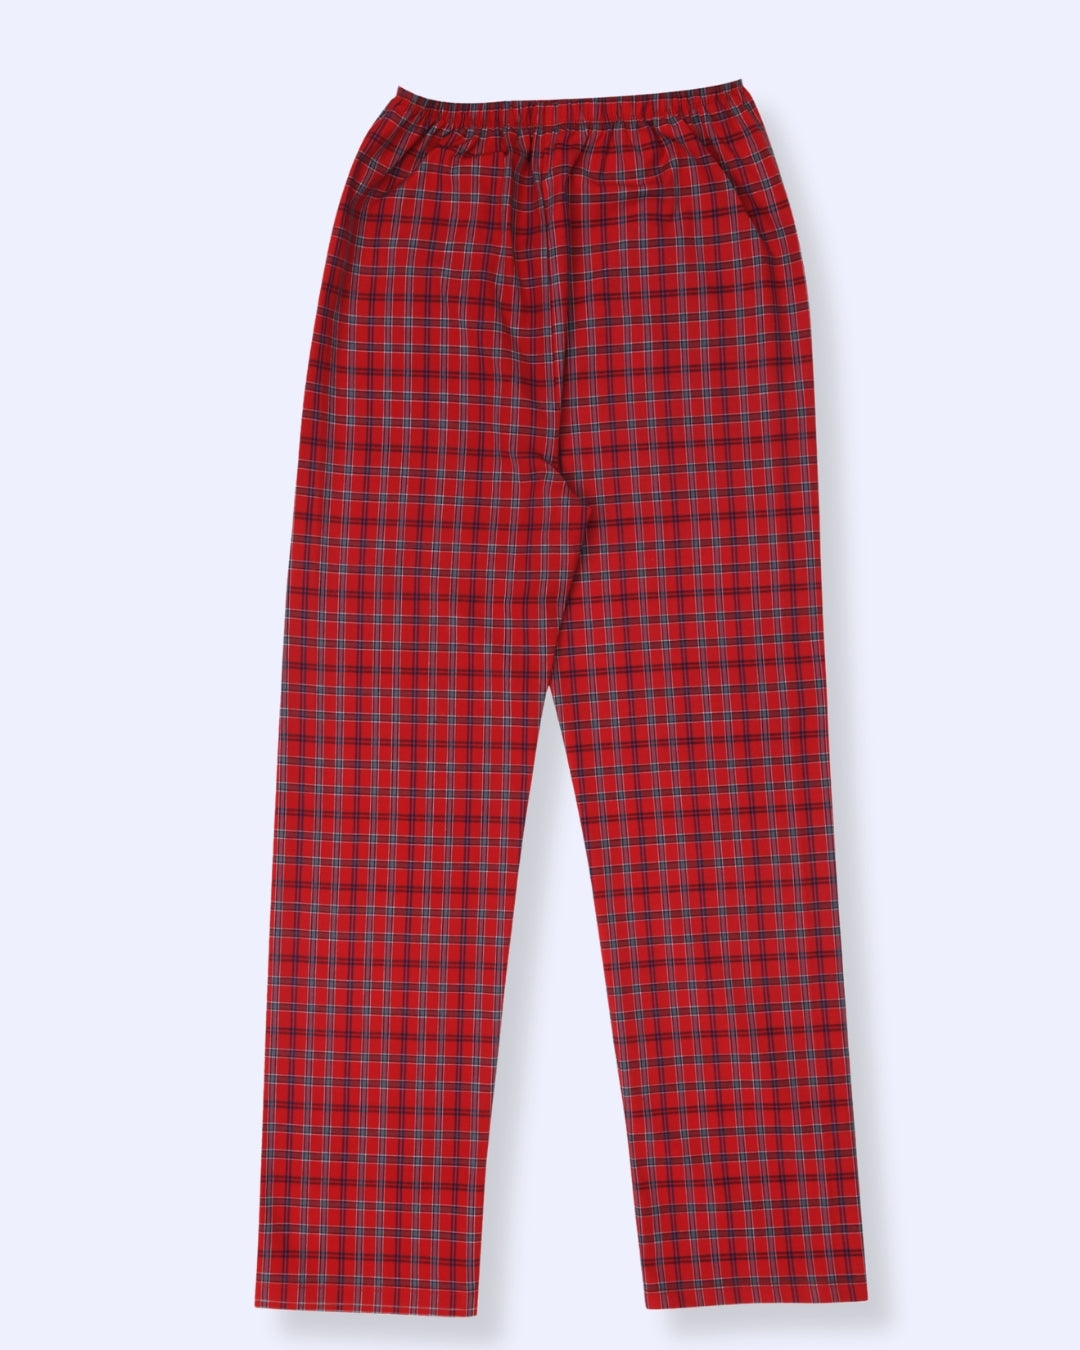 Red & Grey Checks Printed Cotton Nightwear for Girls